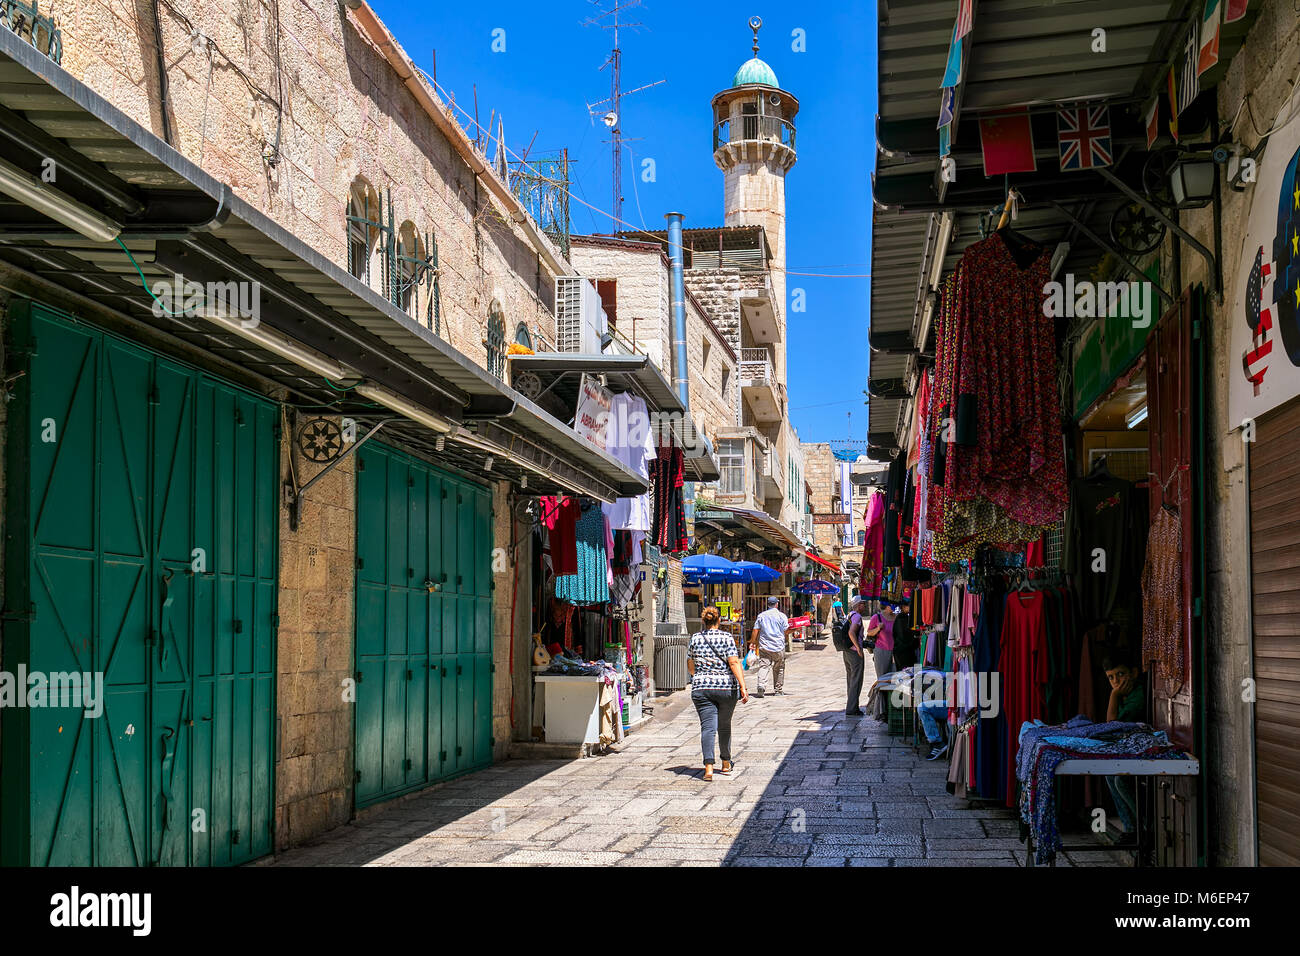 JERUSALEM, ISRAEL - JULY 16, 2017: Narrow street among small shops of famous bazaar - market in Old City of Jerusalem, very popular destination with l Stock Photo